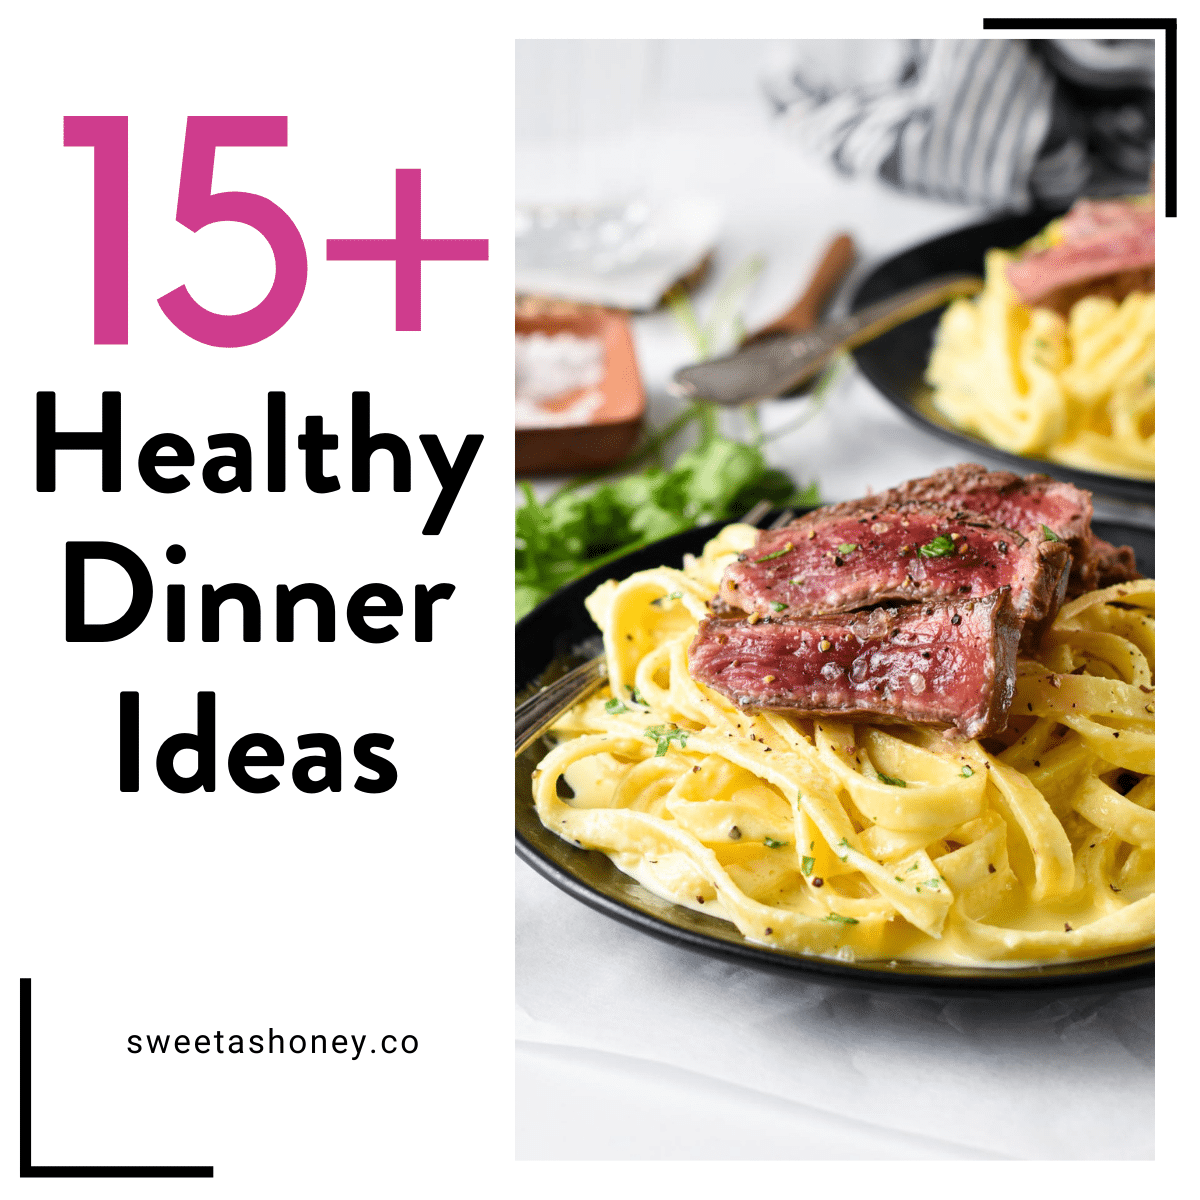 Steak Pasta featured on 15+ Healthy Dinner Ideas